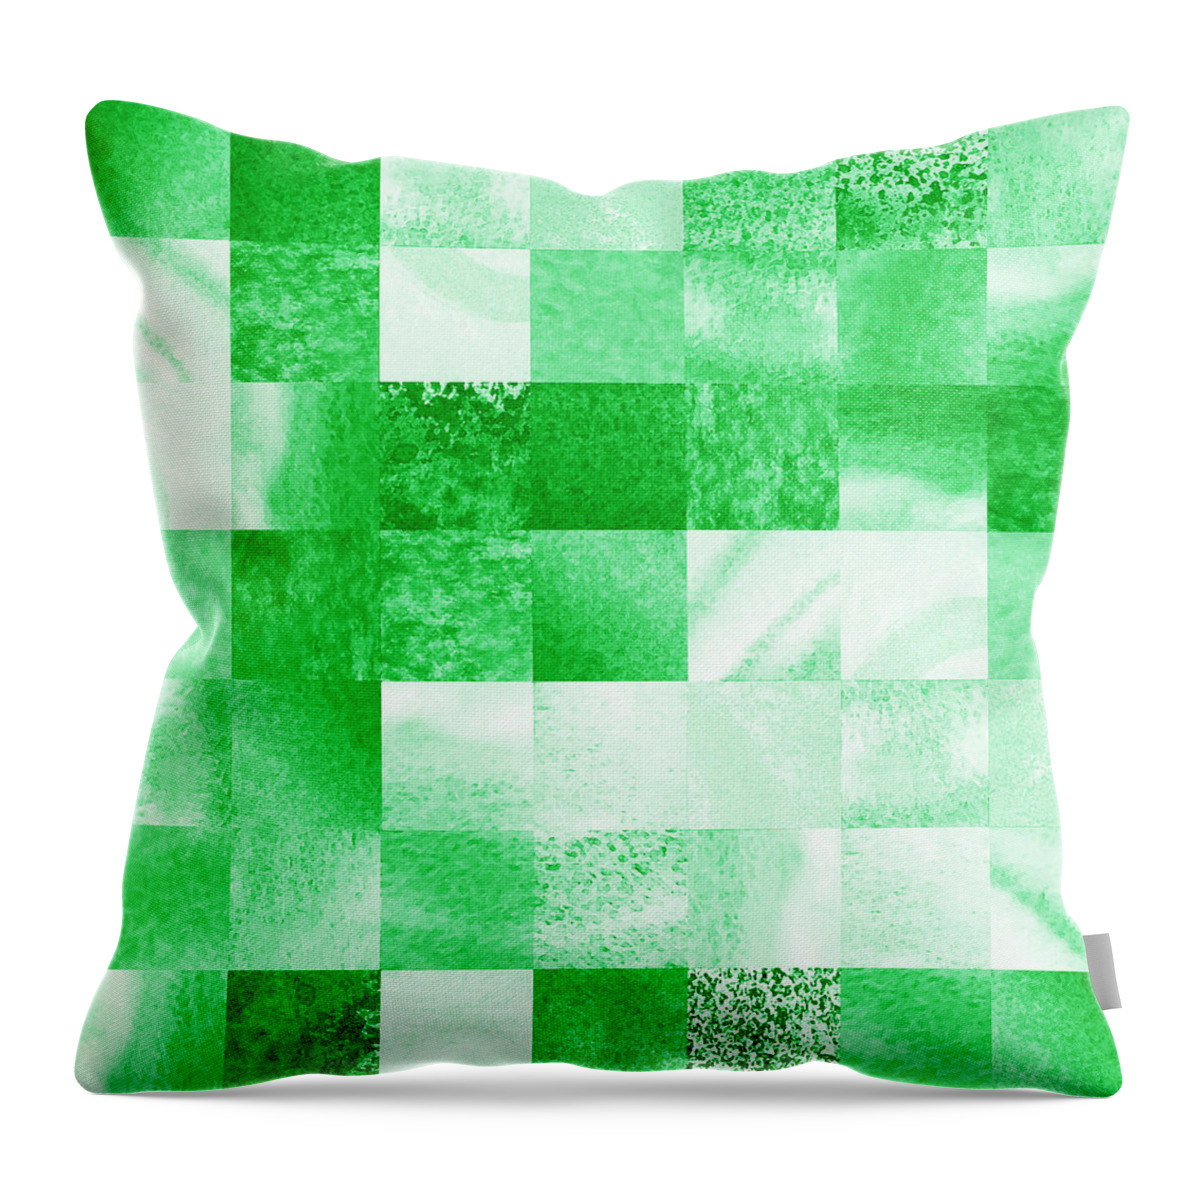 Green Throw Pillow featuring the painting Baby Green Marble Quilt III by Irina Sztukowski